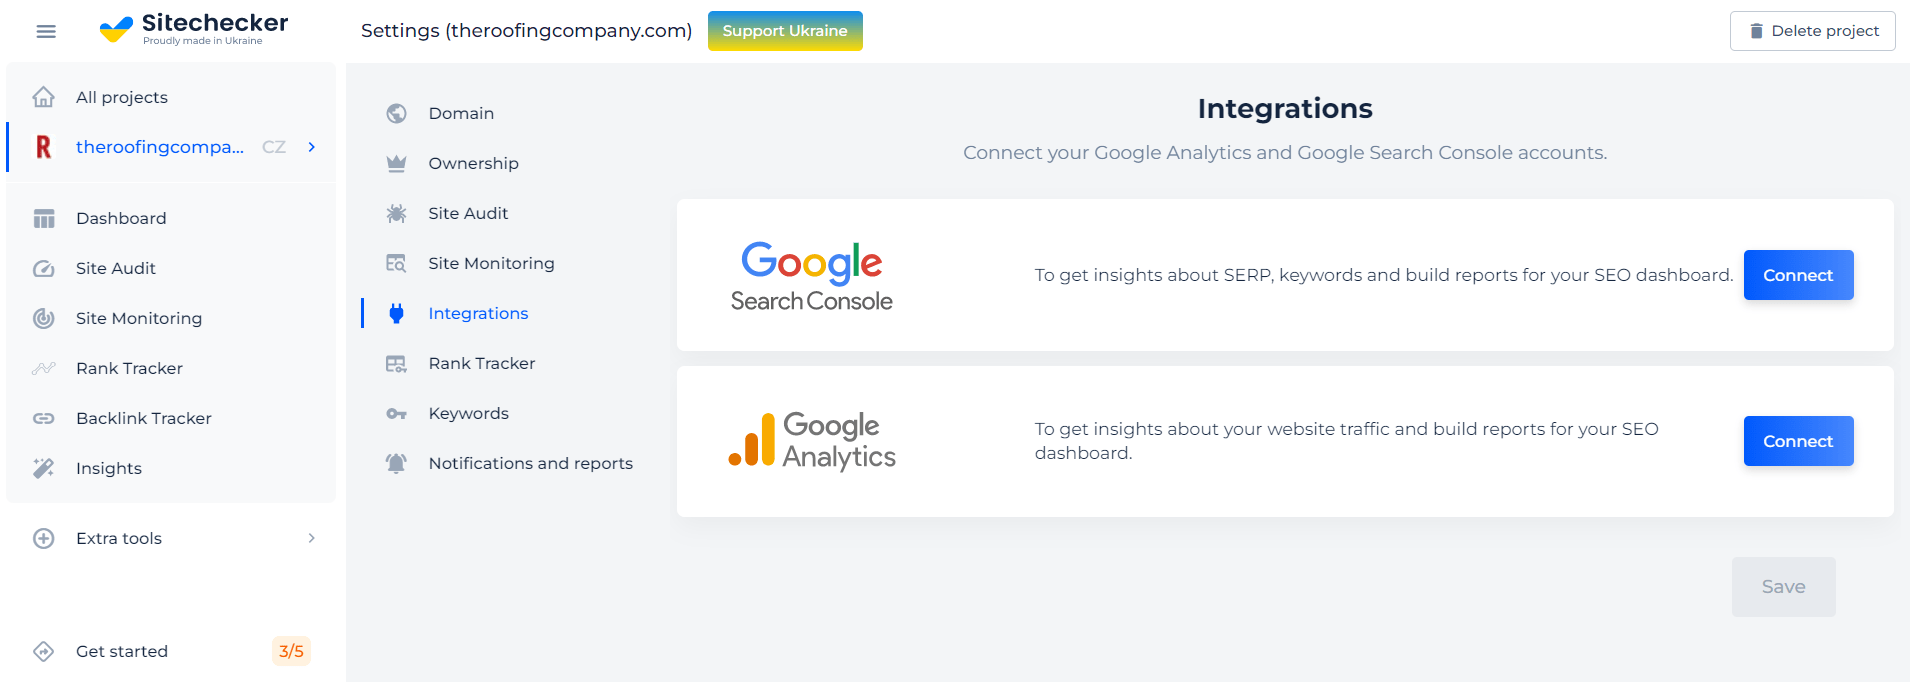 Sitechecket integration with Google Analytics